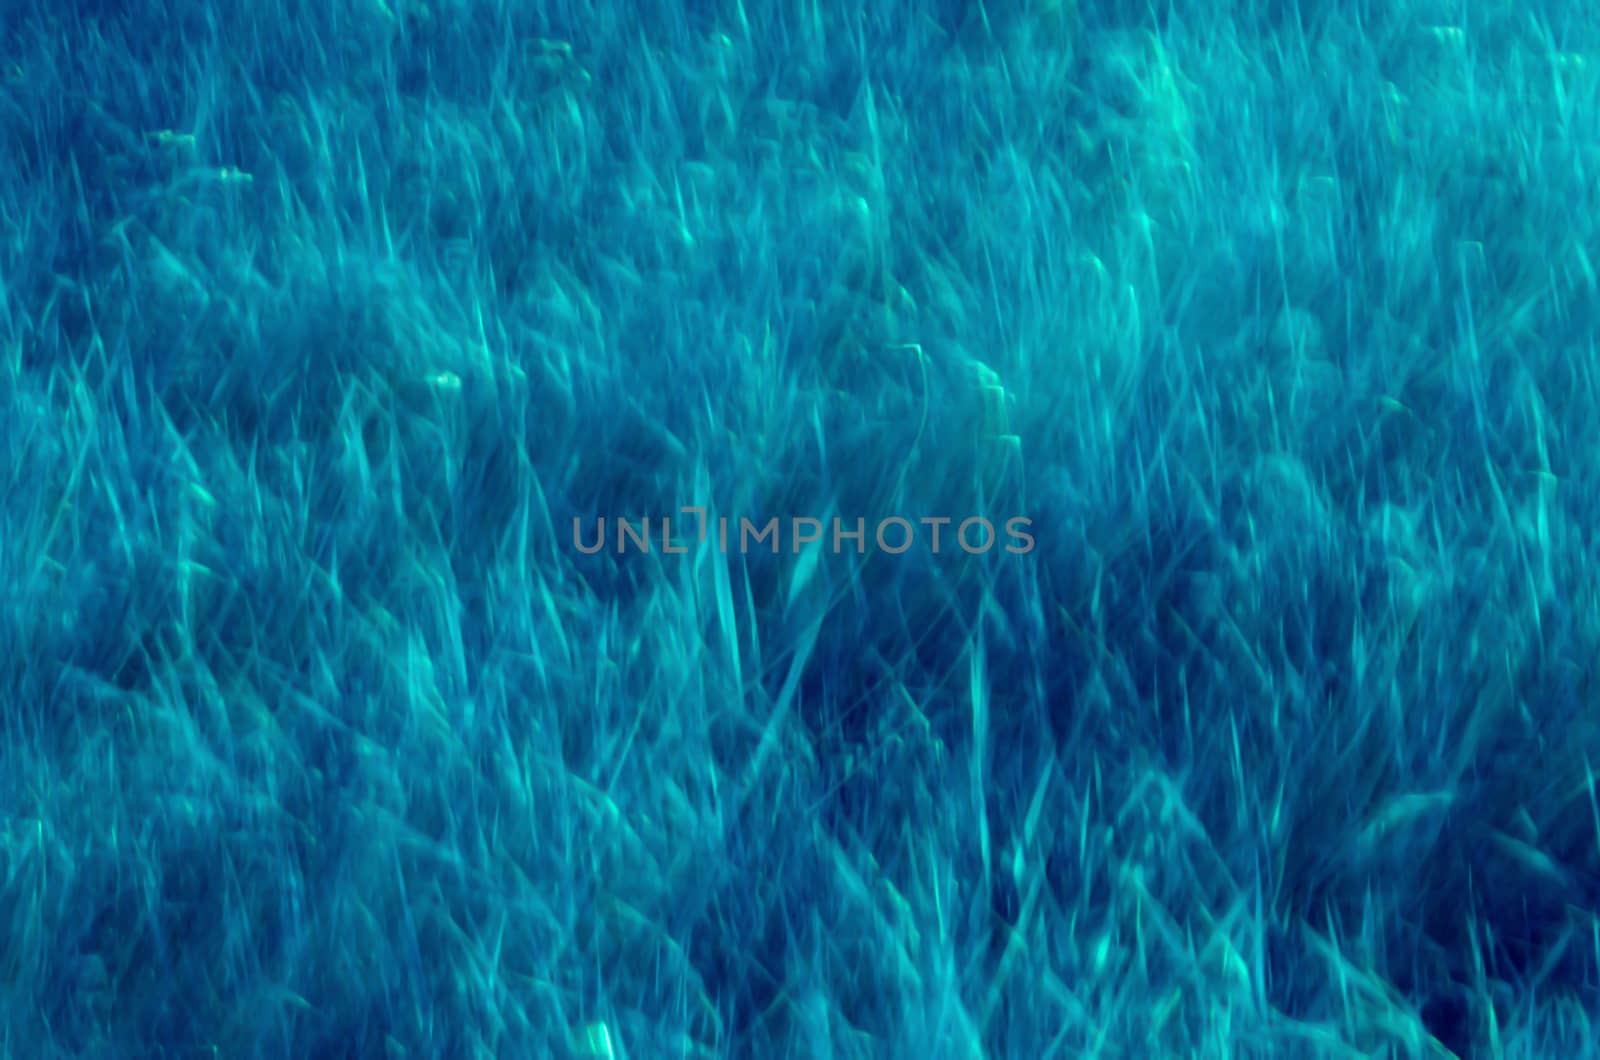 Abstract blue blur grass background, nature pattern. 